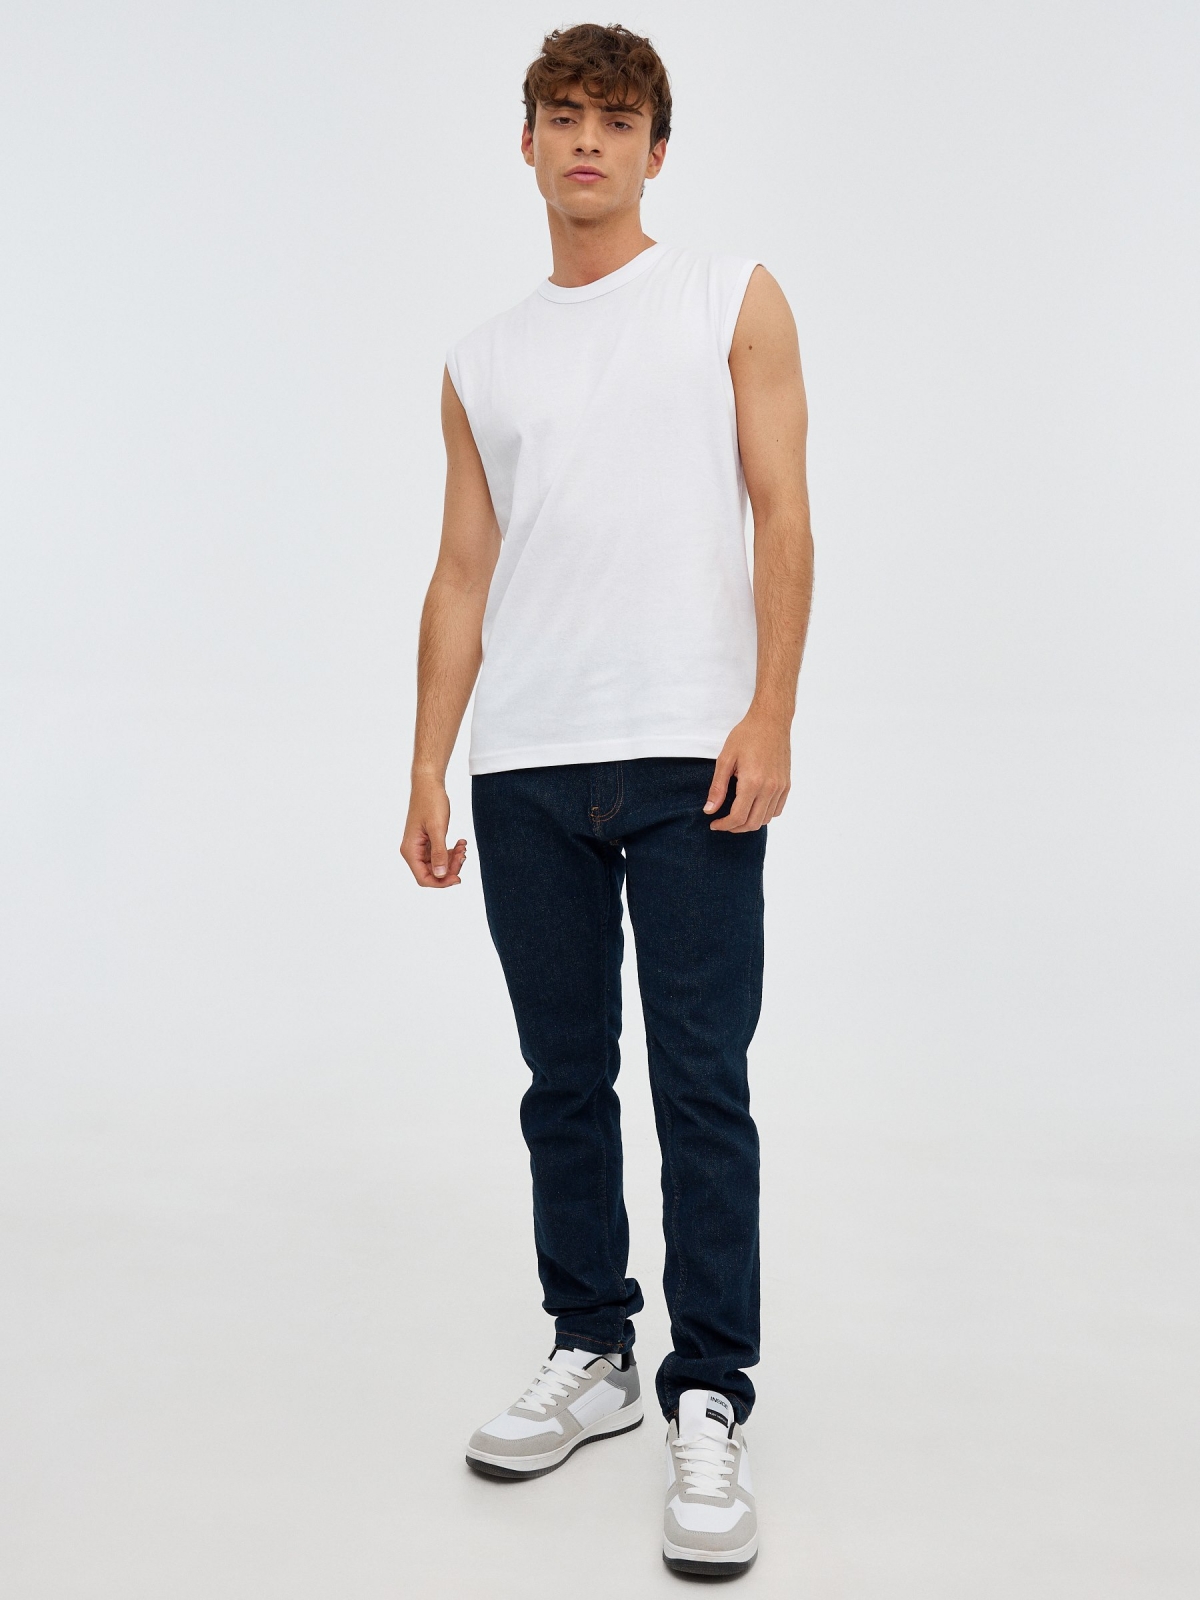 Basic sleeveless t-shirt white front view